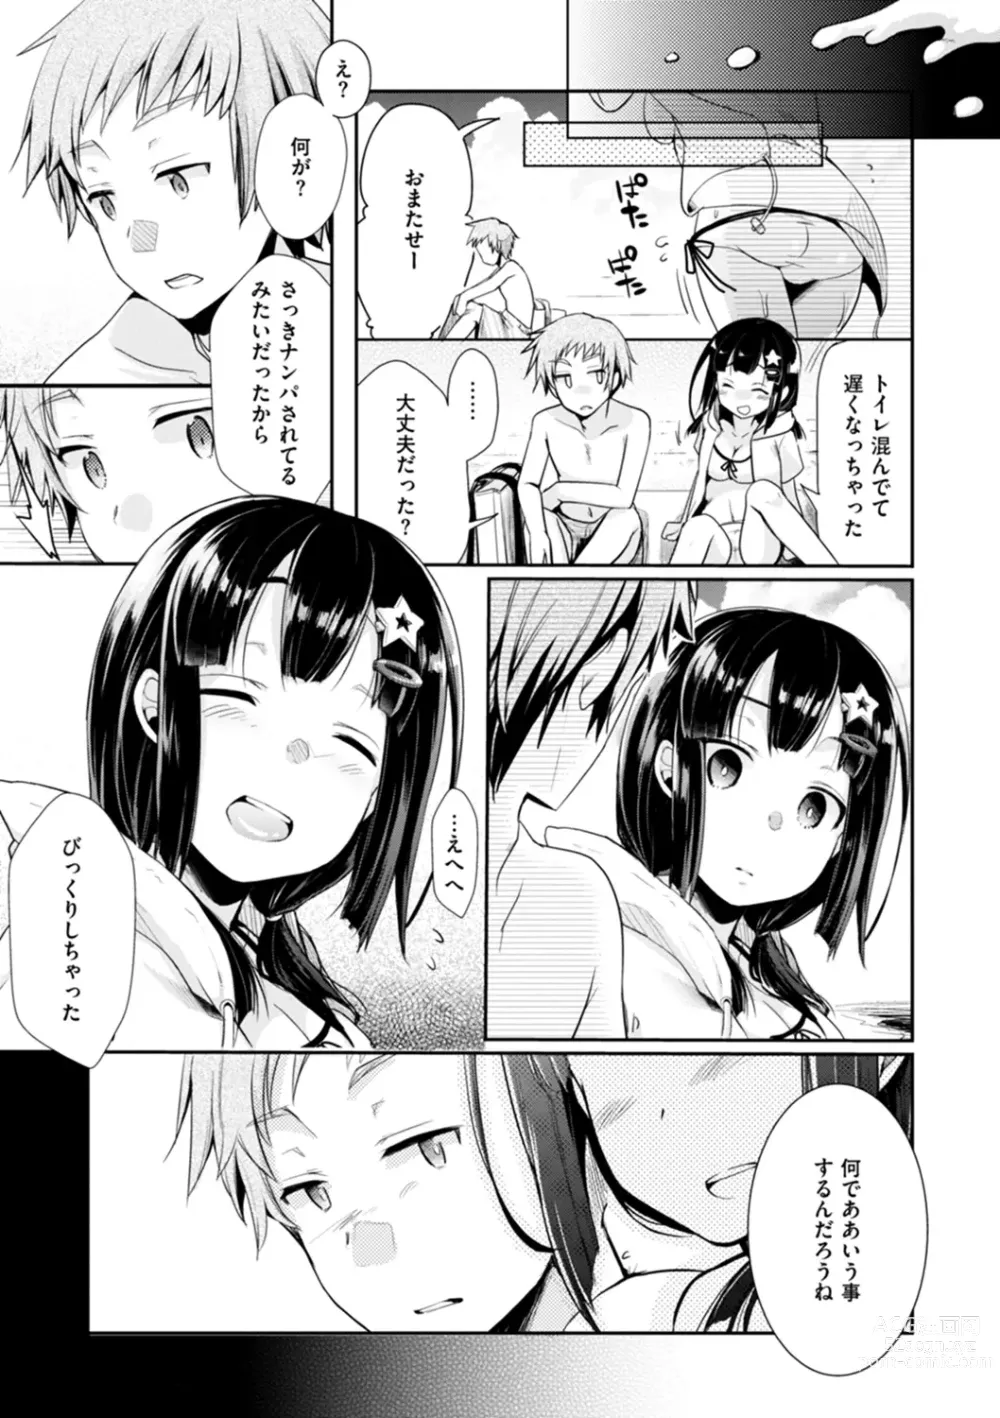 Page 191 of manga Kanojo no Jijou - Her Circumstances